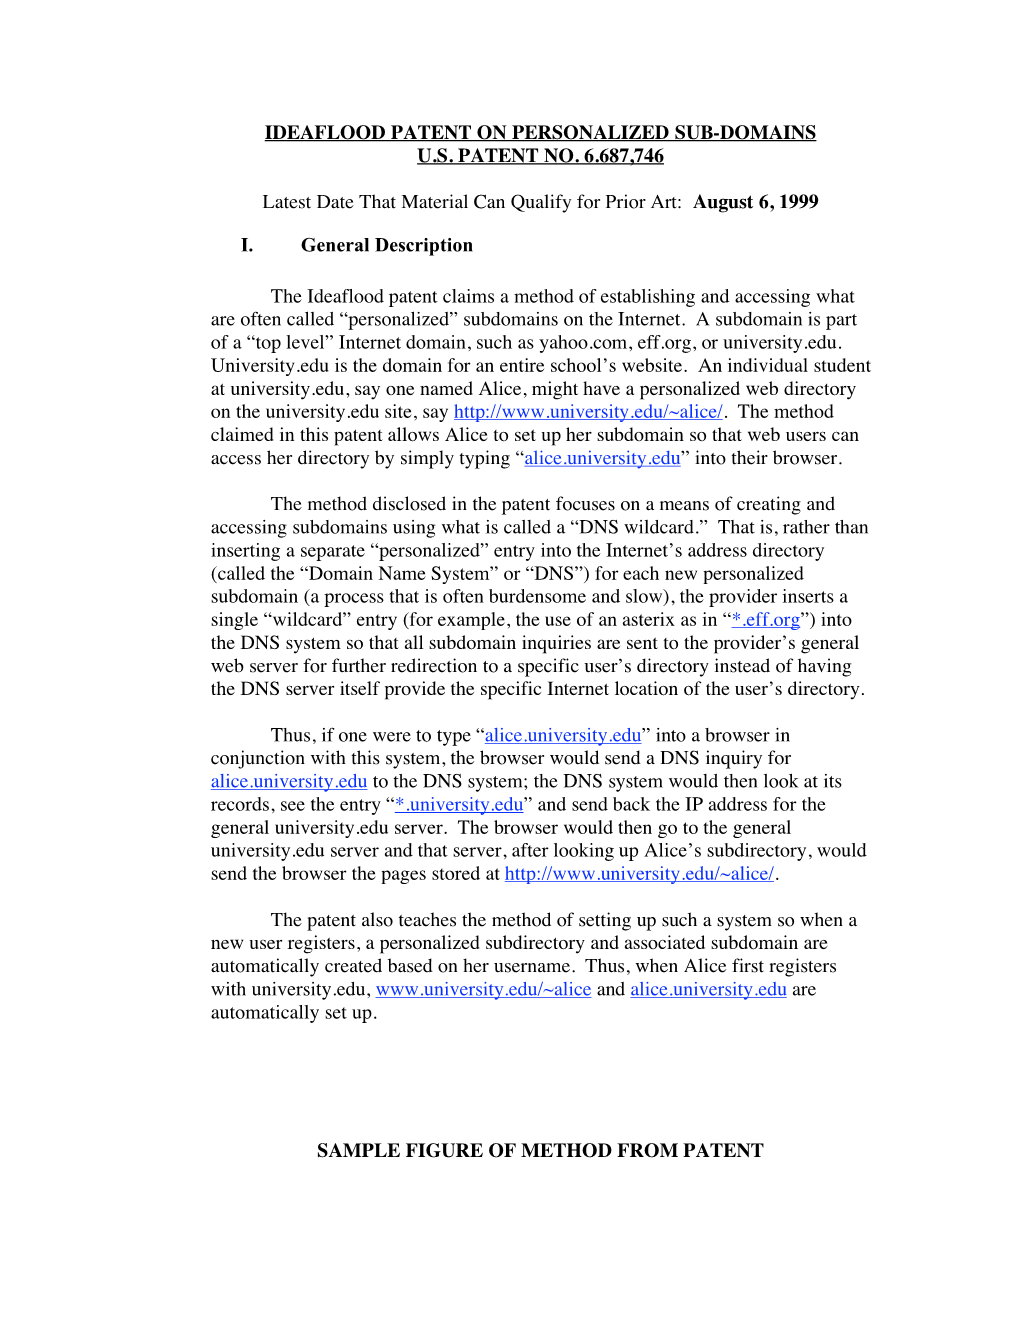 Ideaflood Patent on Personalized Sub-Domains U.S